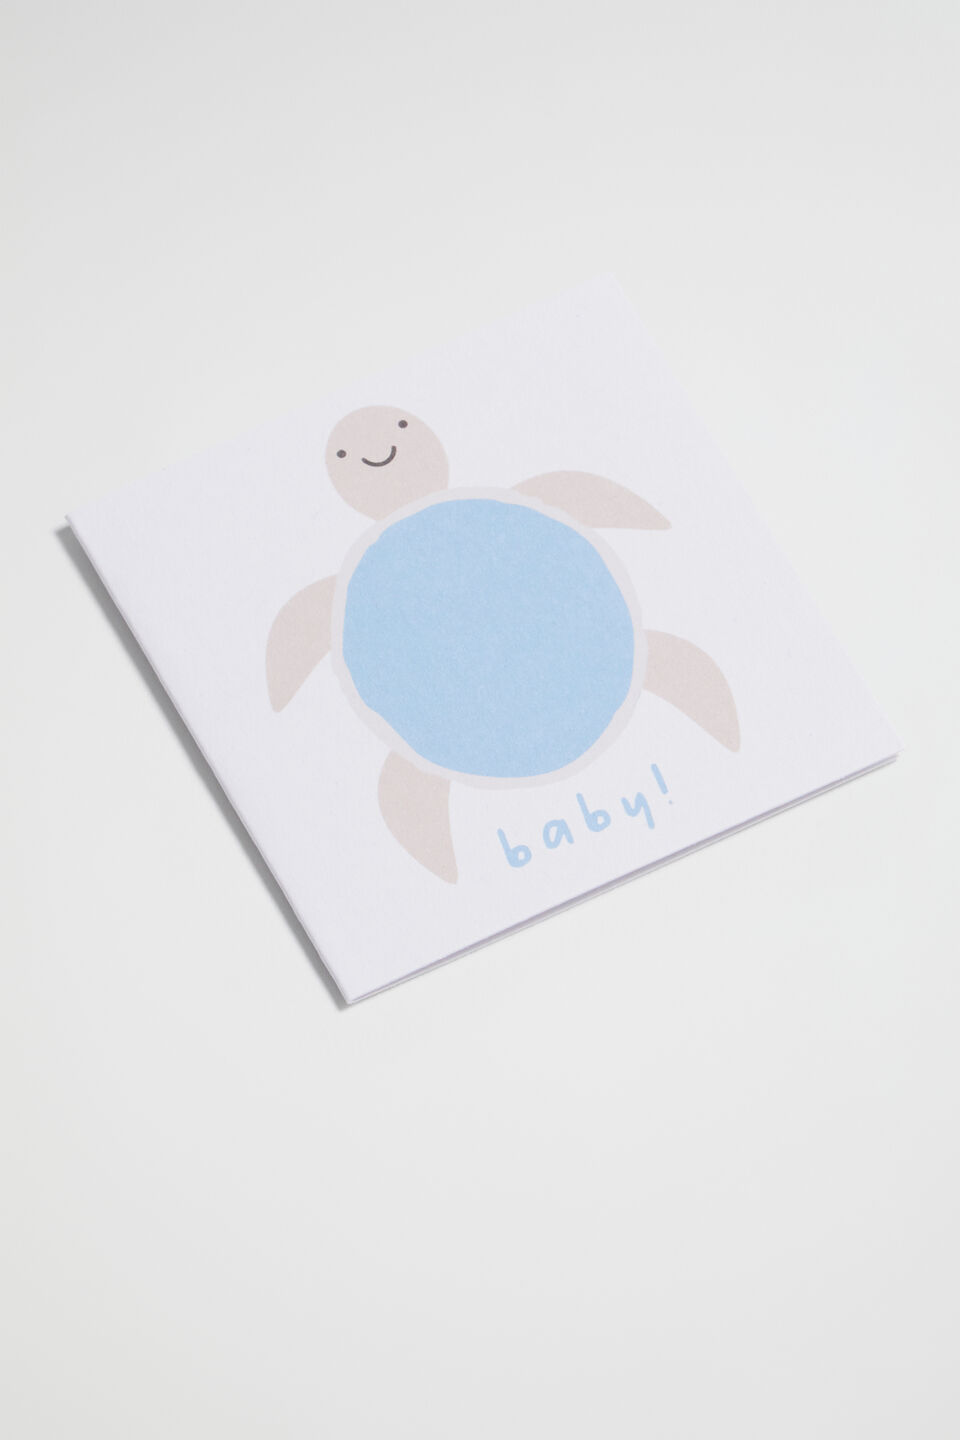 Turtle Baby Card  Multi